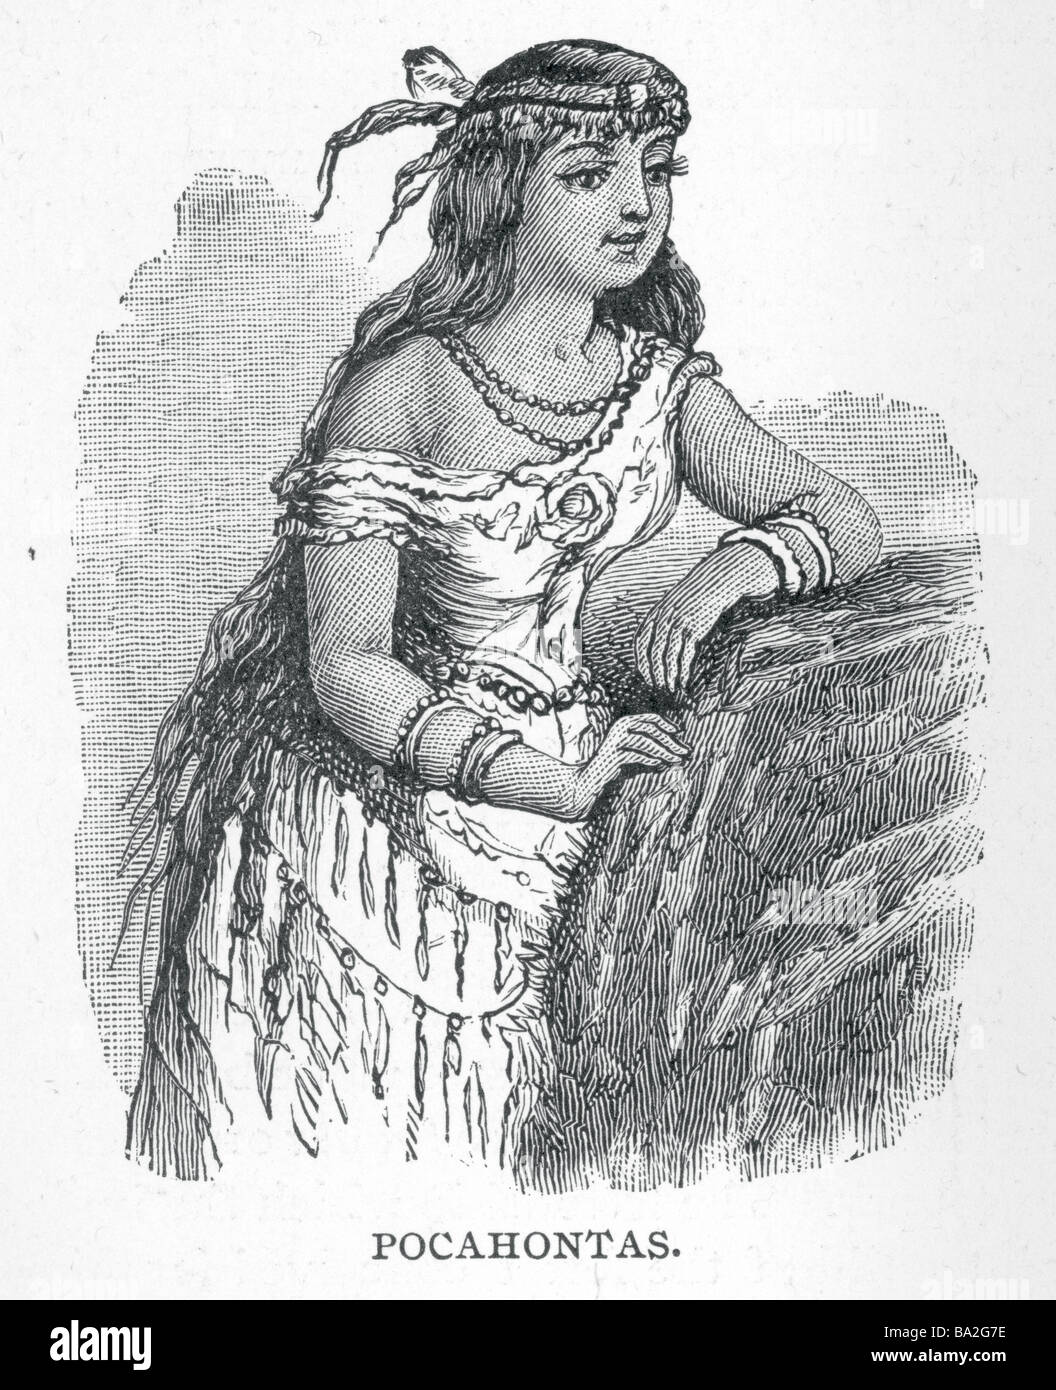 Una incisione di Pocahontas Foto Stock